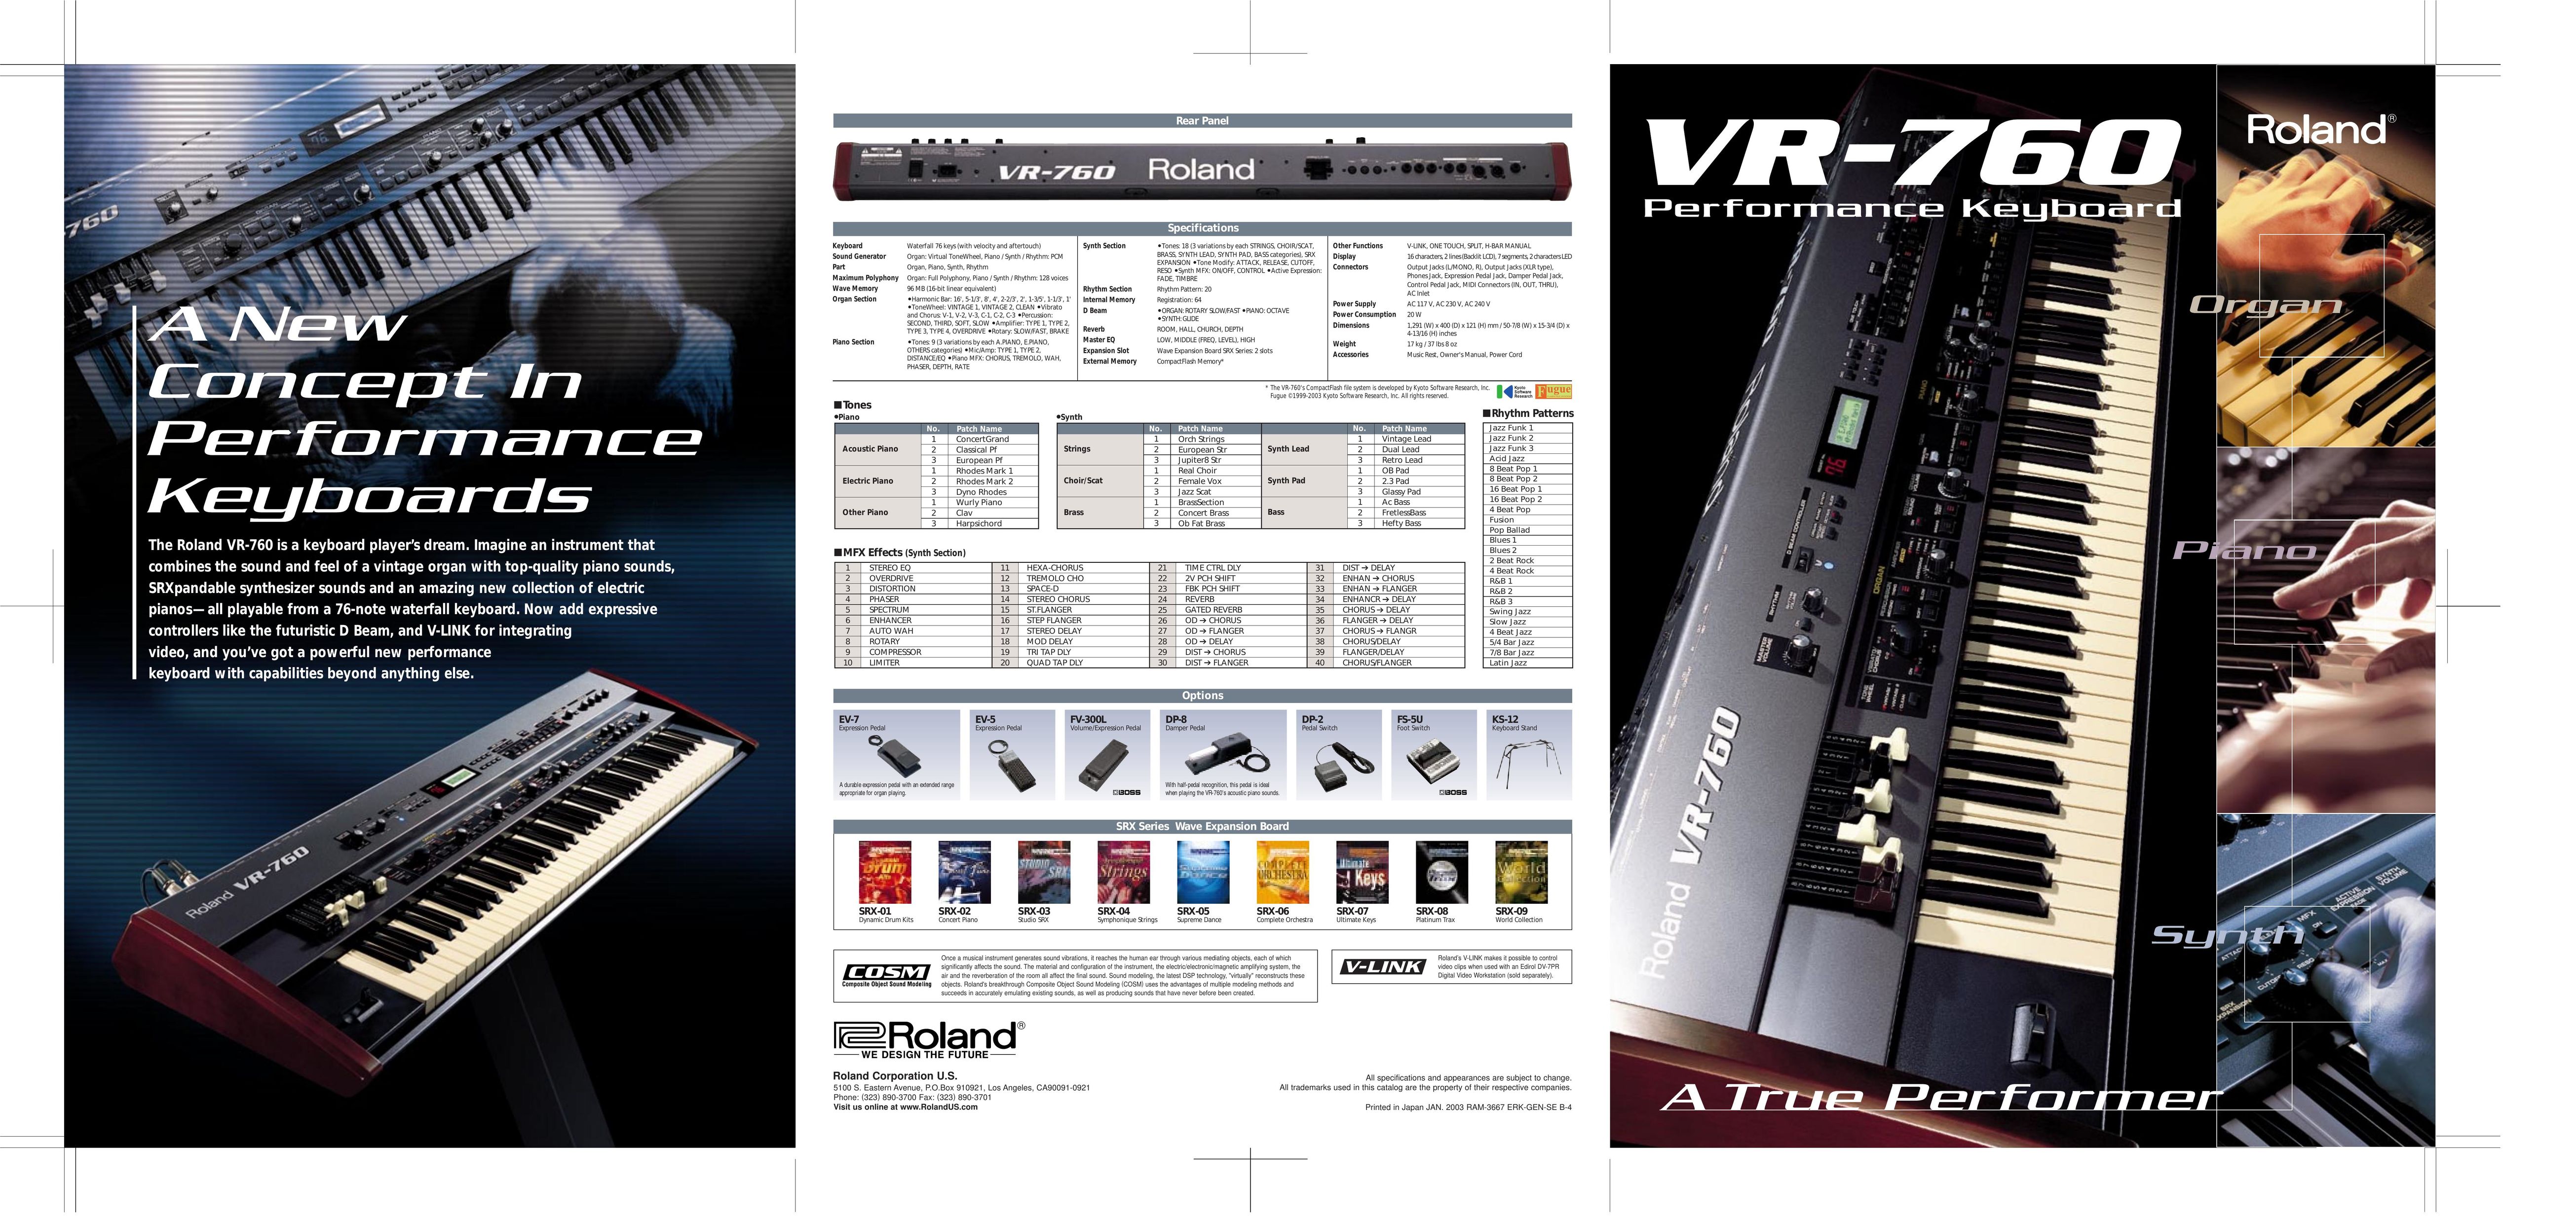 Roland VR-760 Video Game Keyboard User Manual